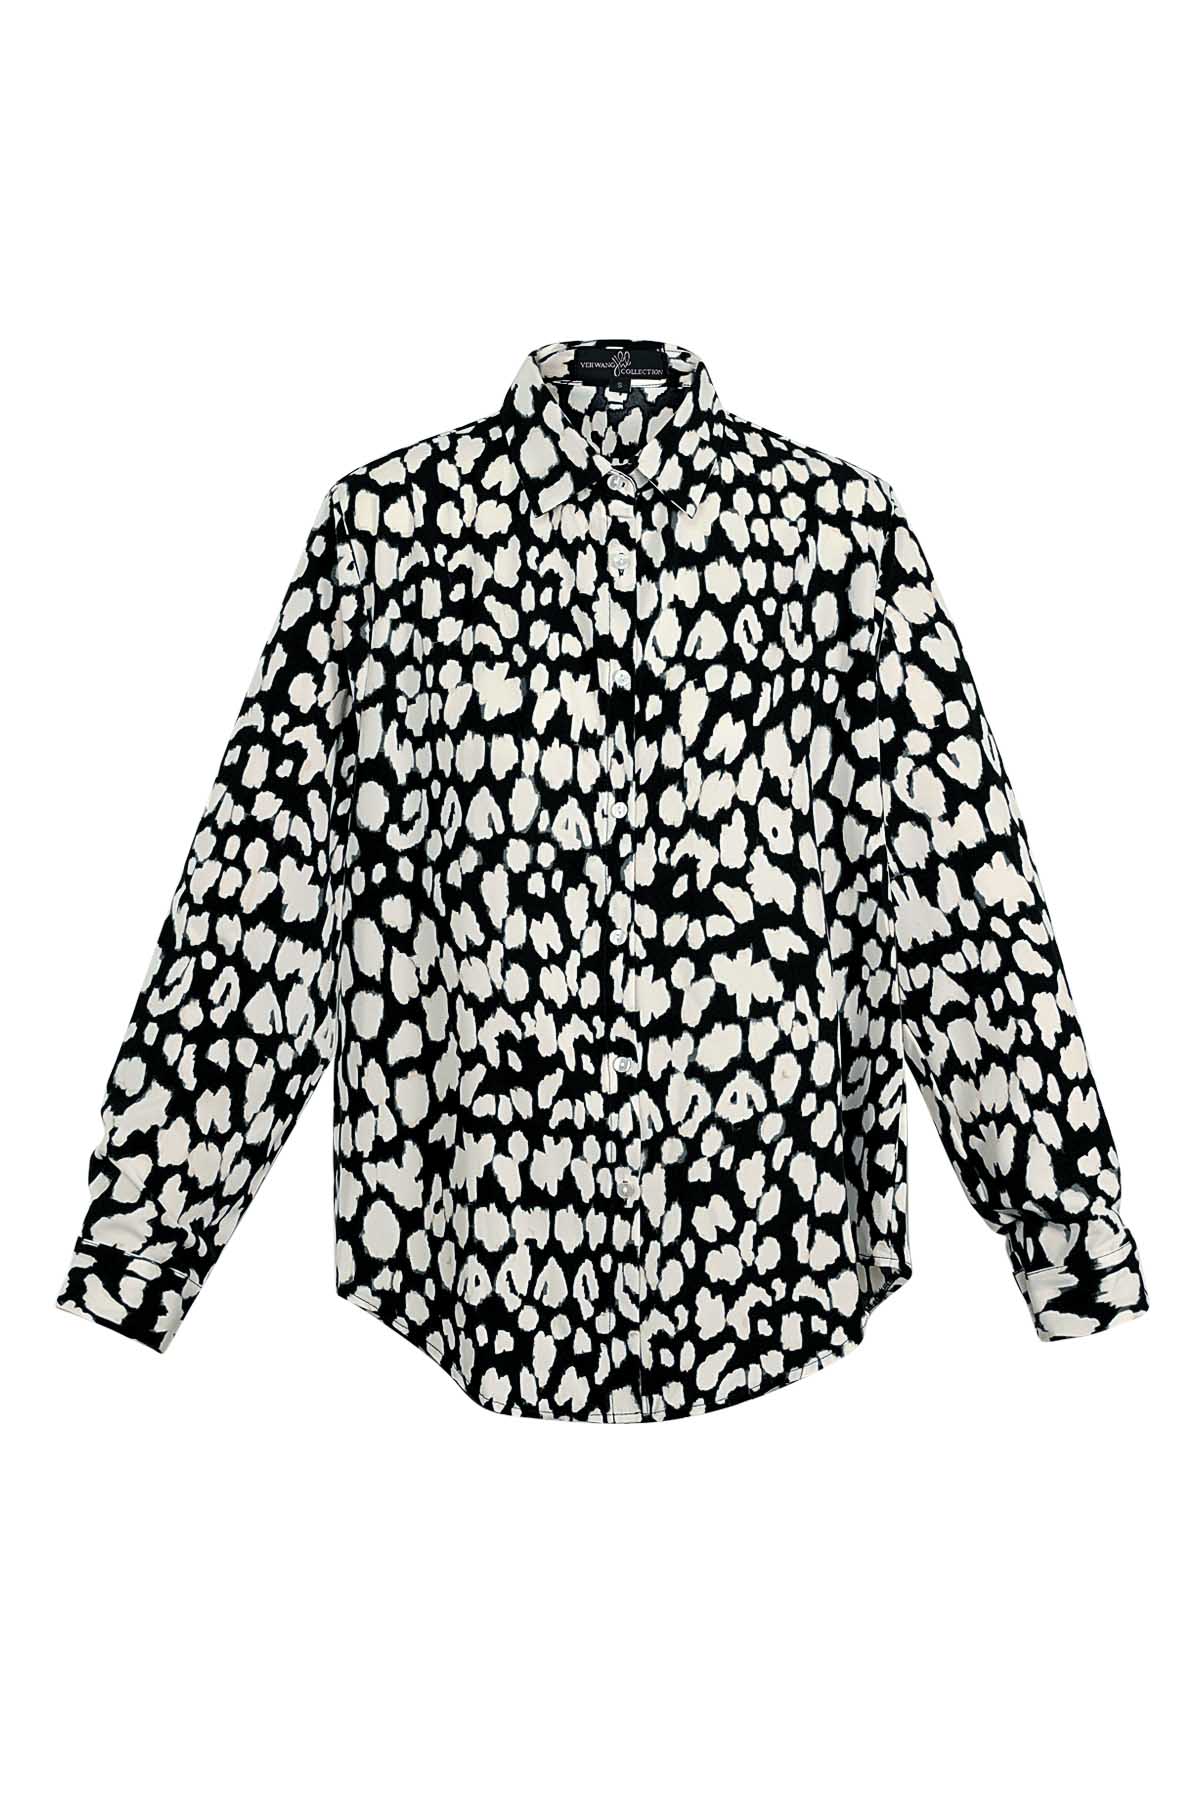 Leopar desenli bluz siyah beyaz h5 